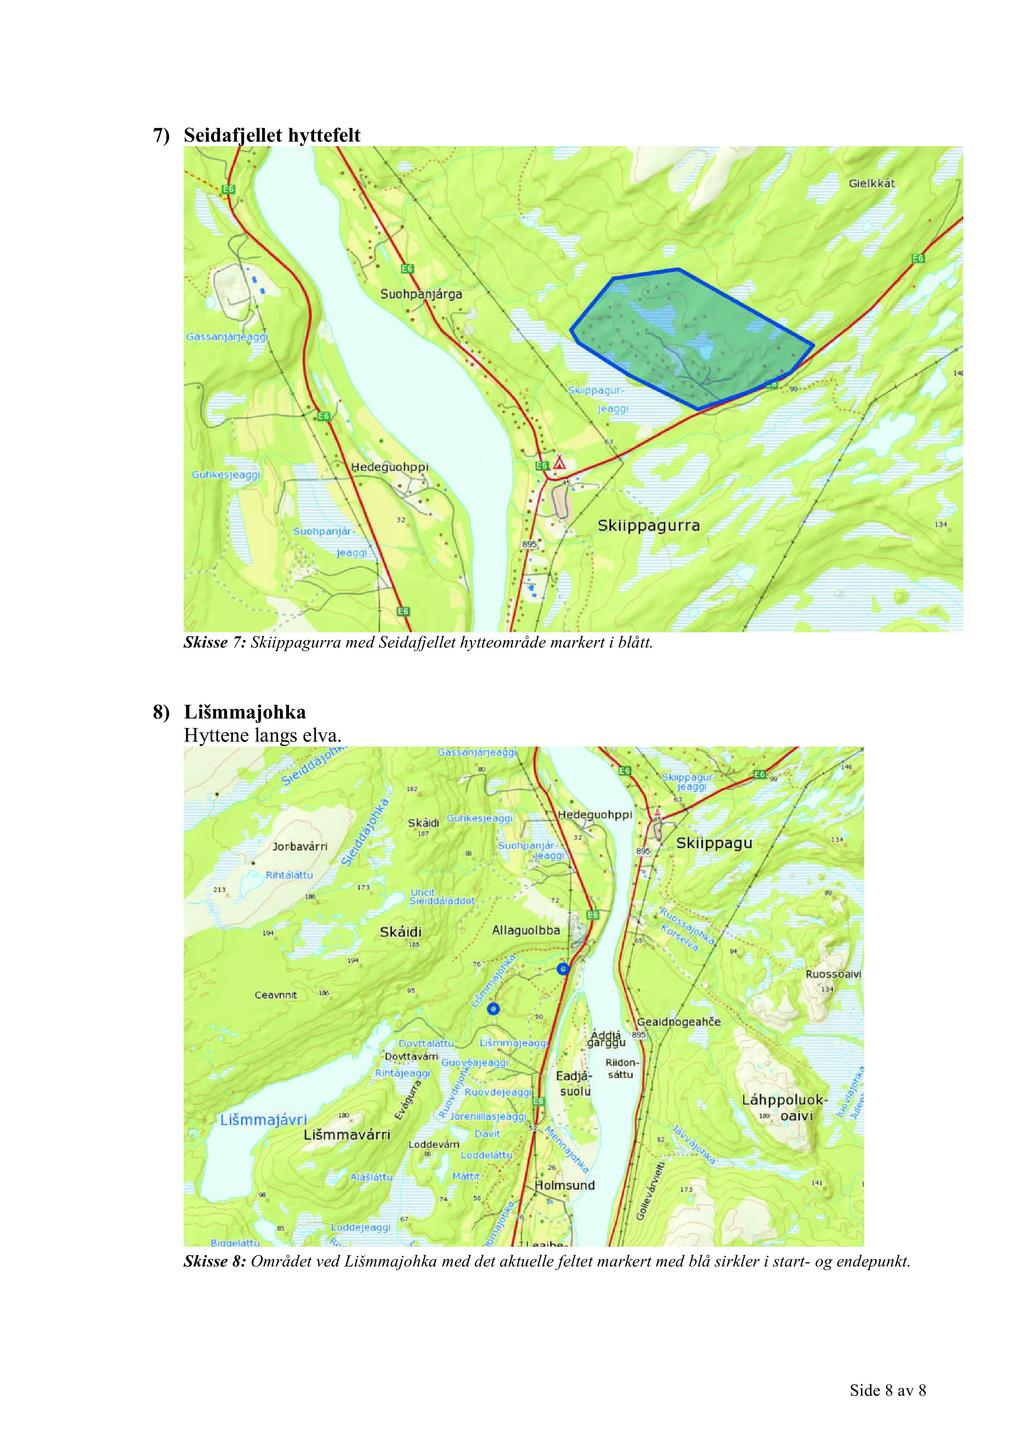 7) Seidafjellet hyttefelt Skisse7: SkiippagurramedSeidafjellethytteområdemarkerti blått.